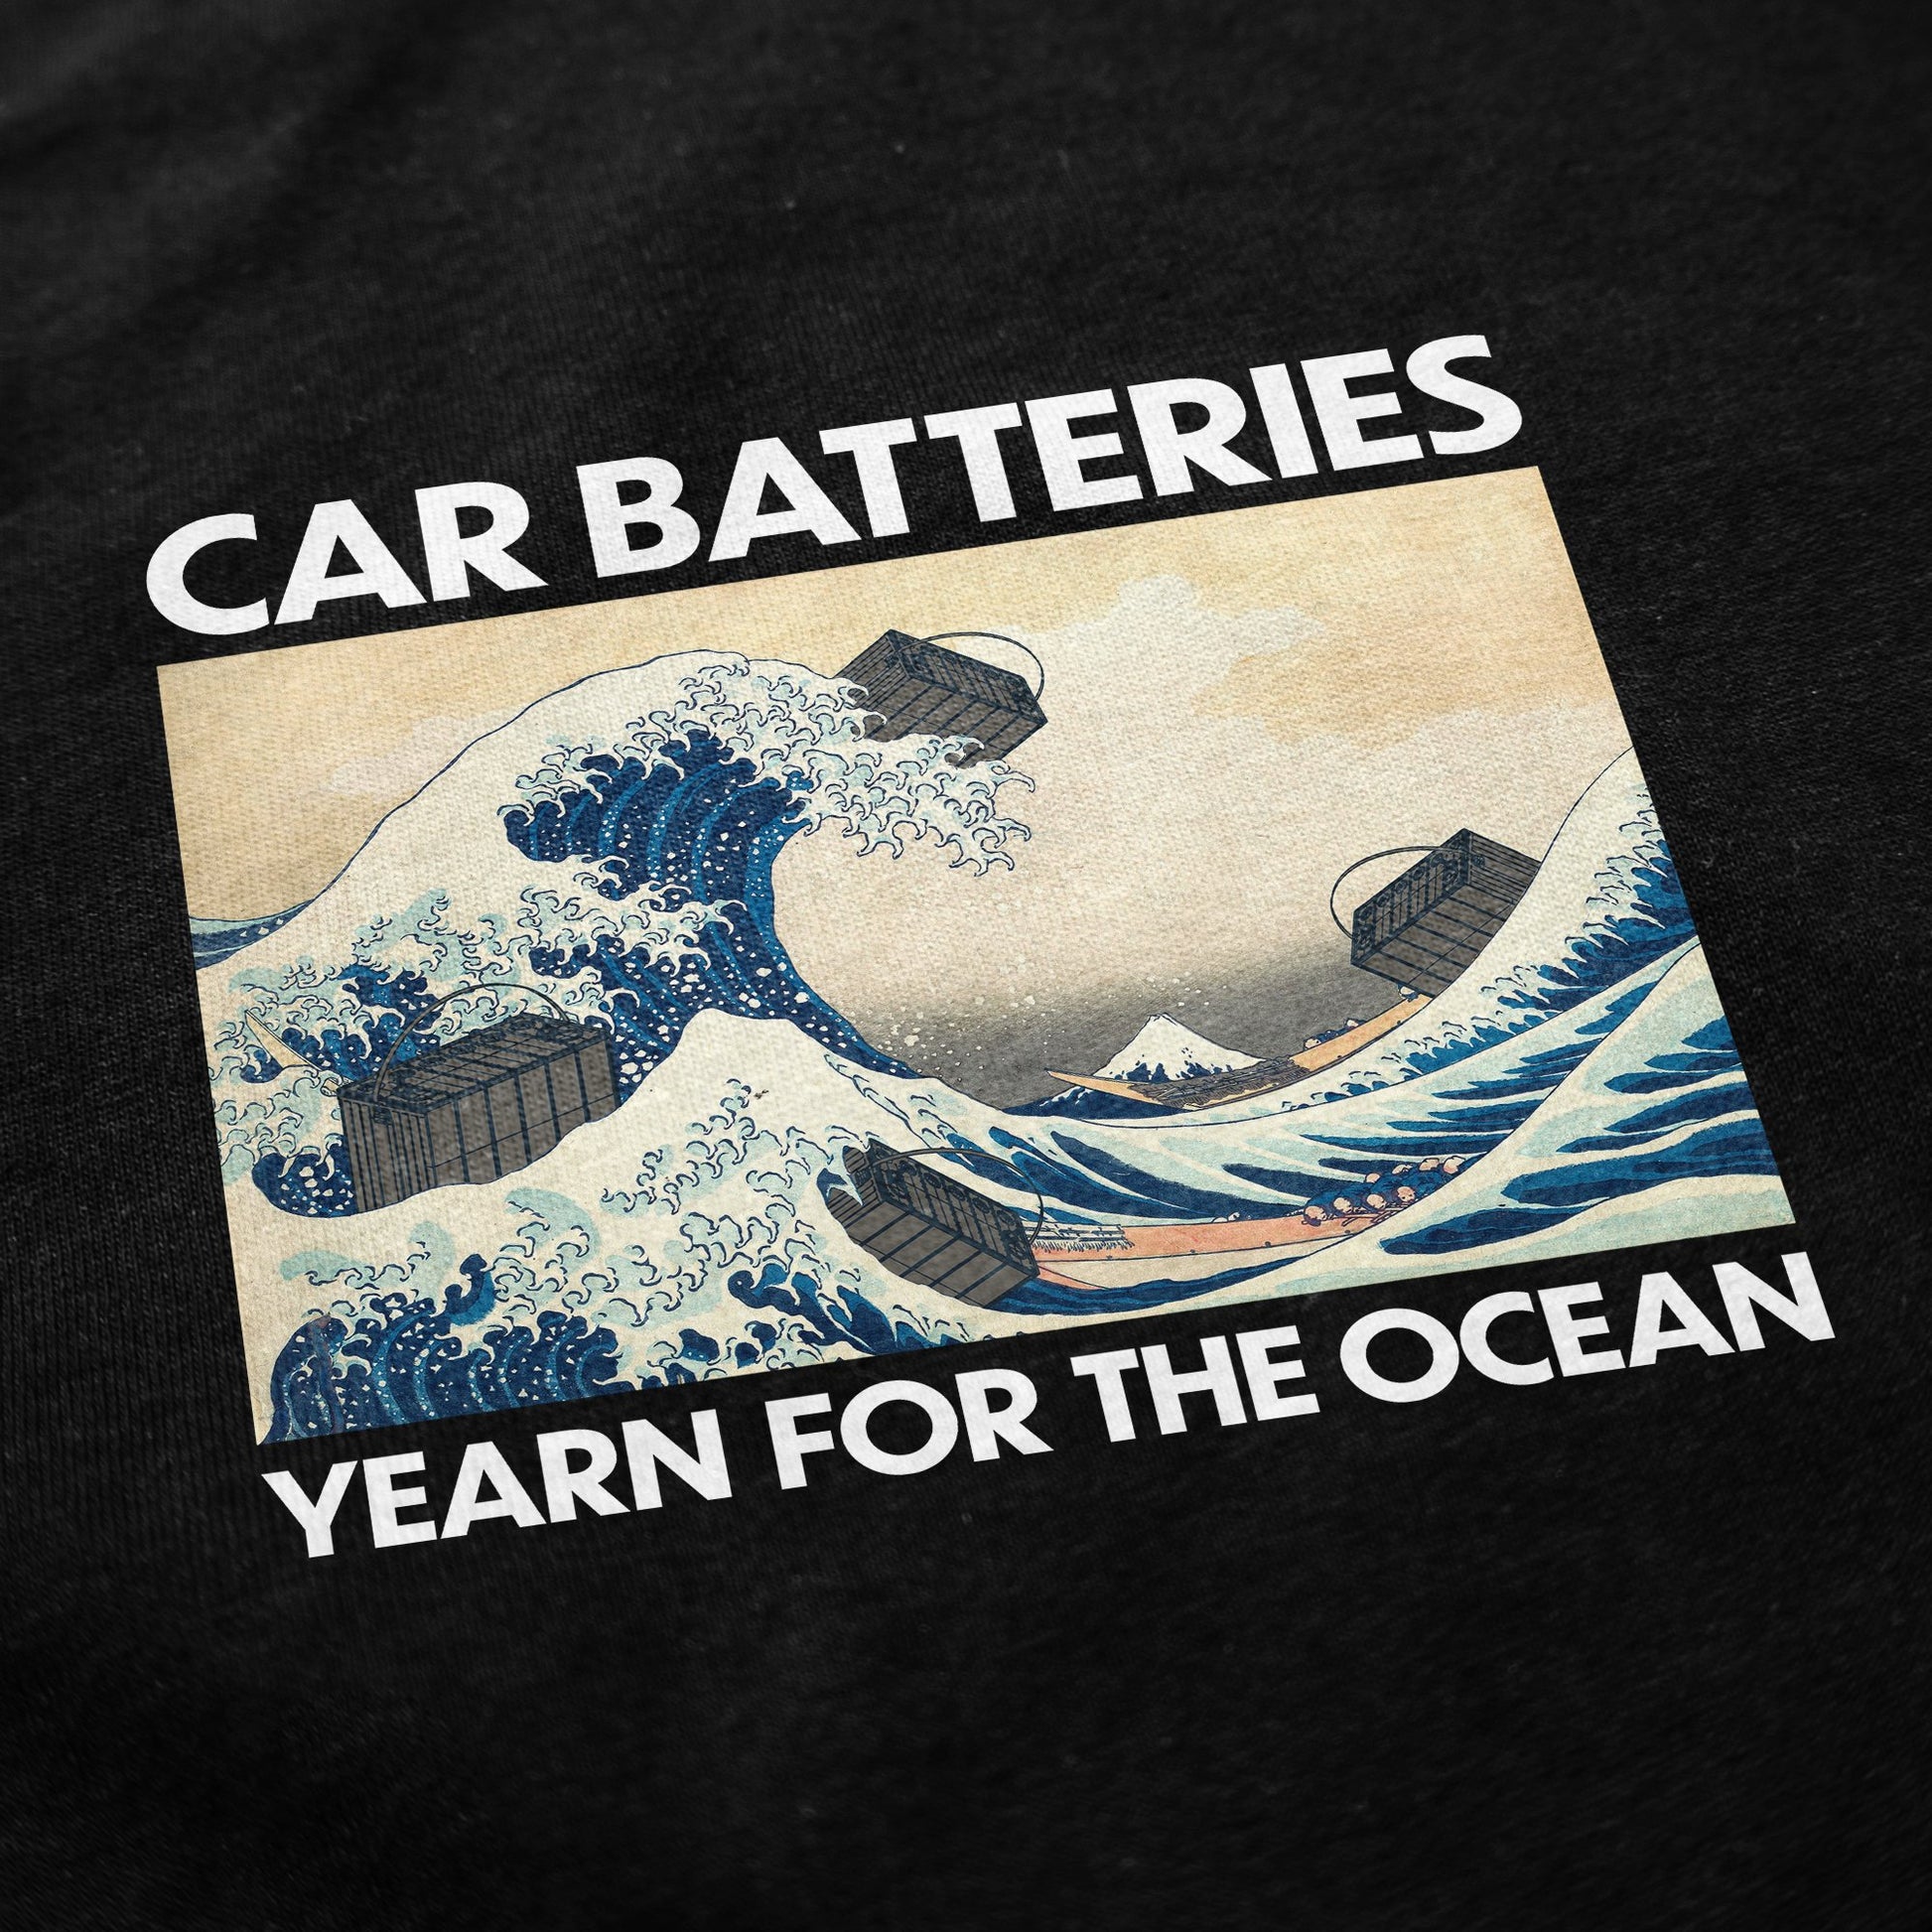 Car Batteries T Shirt - Shitheadsteve